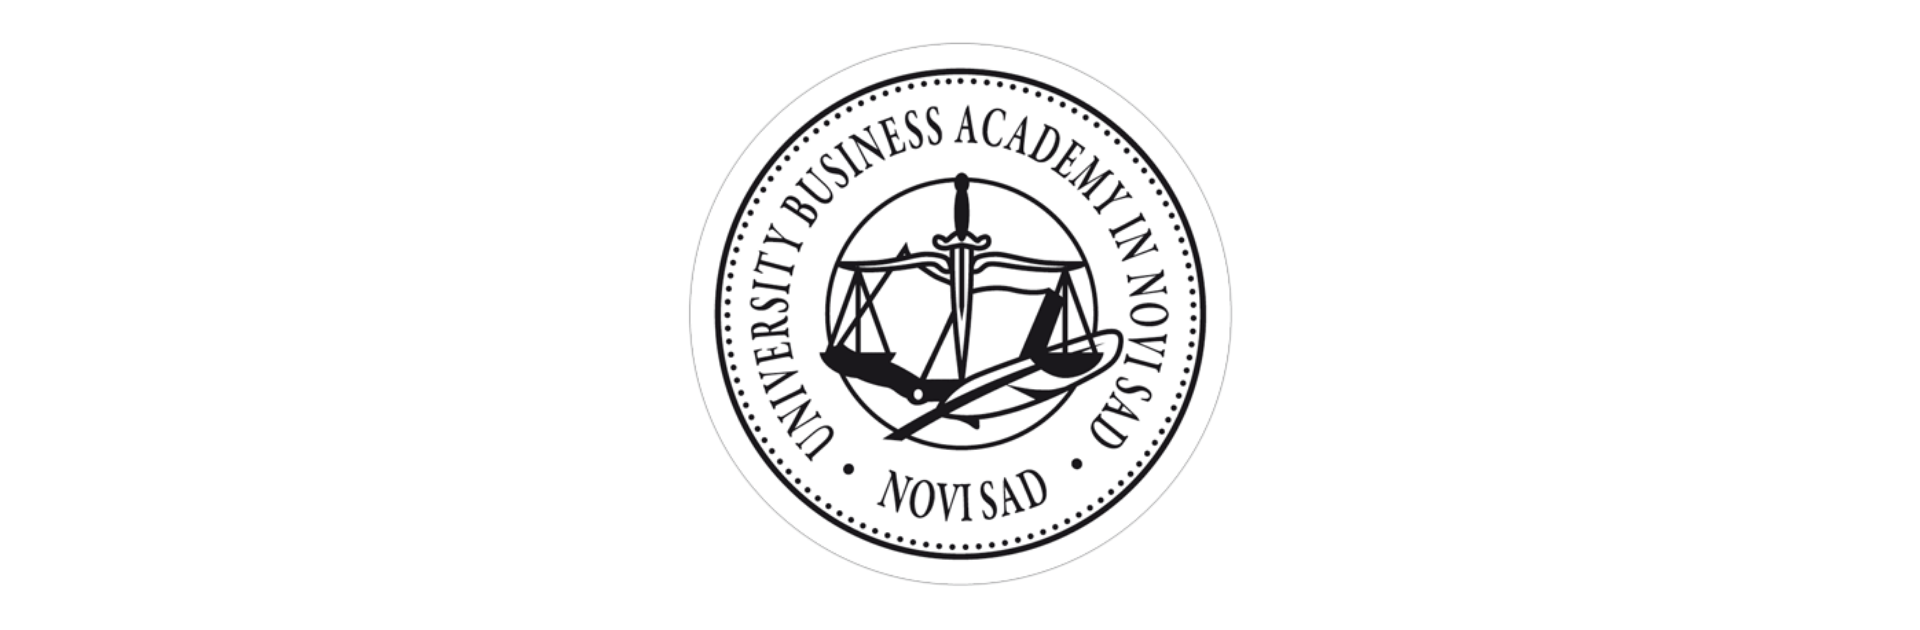 University Business Academy in Novi Sad